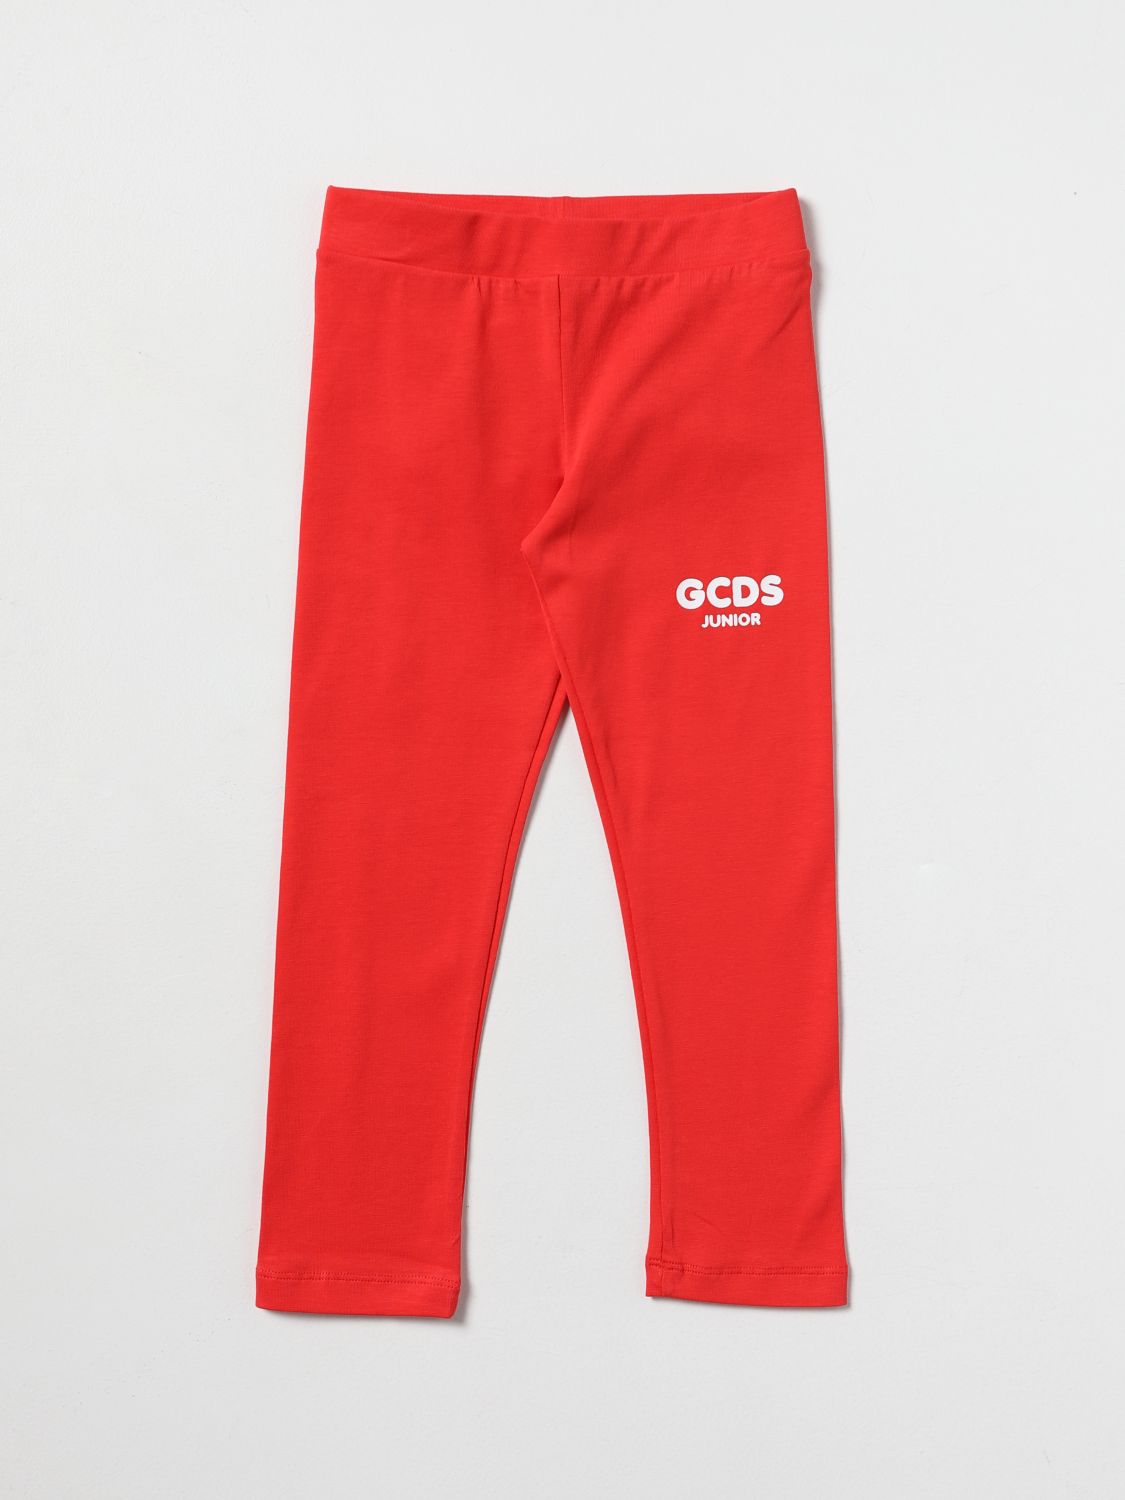 Pantalón Gcds: Pantalón niños Gcds rojo 1